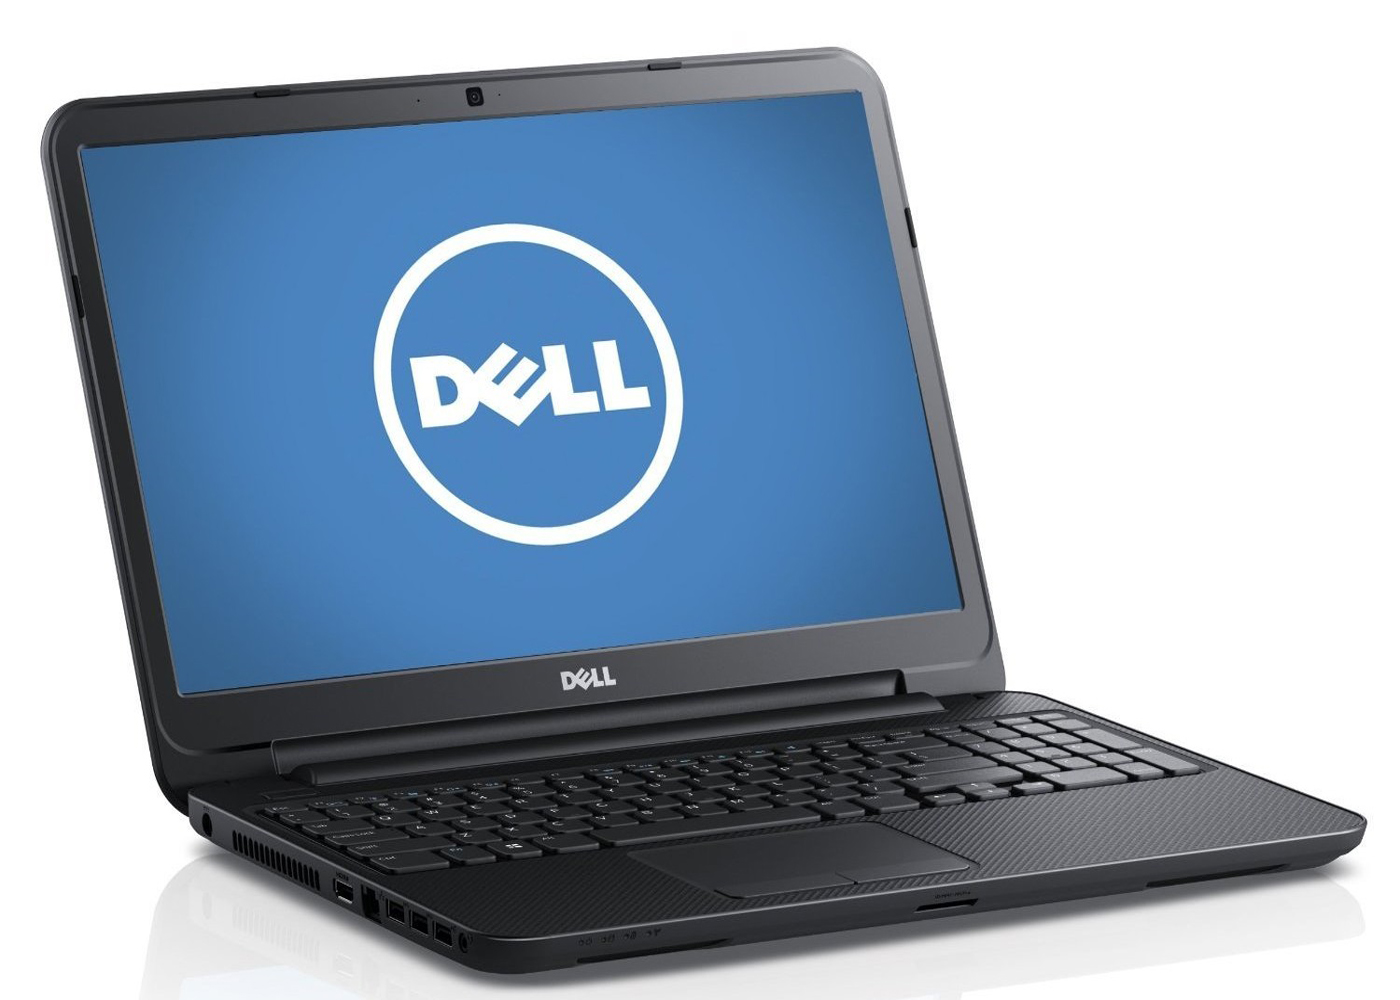 Dell Inspiron 15 3521 15.6-inch Laptop (Black)01